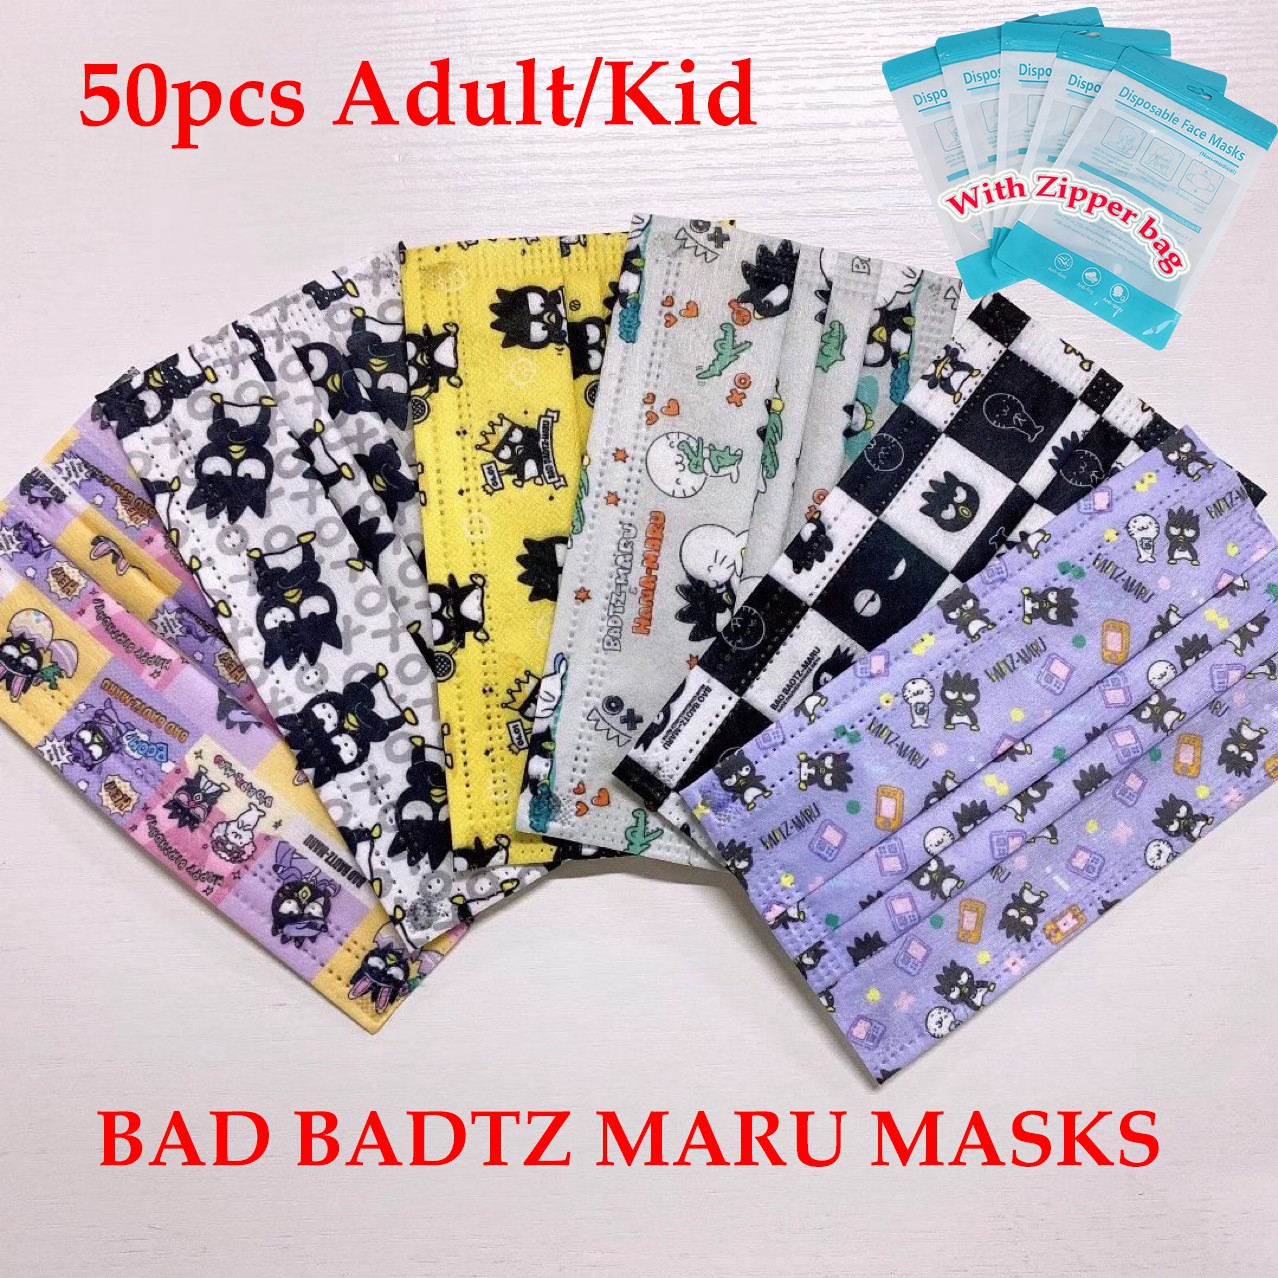 50pcs Adult/Kid XO mask 3 layers Disposable BADTZ MARU Face Masks Dustproof printed mask XO BAD BADTZ MARU Mask  4ec81